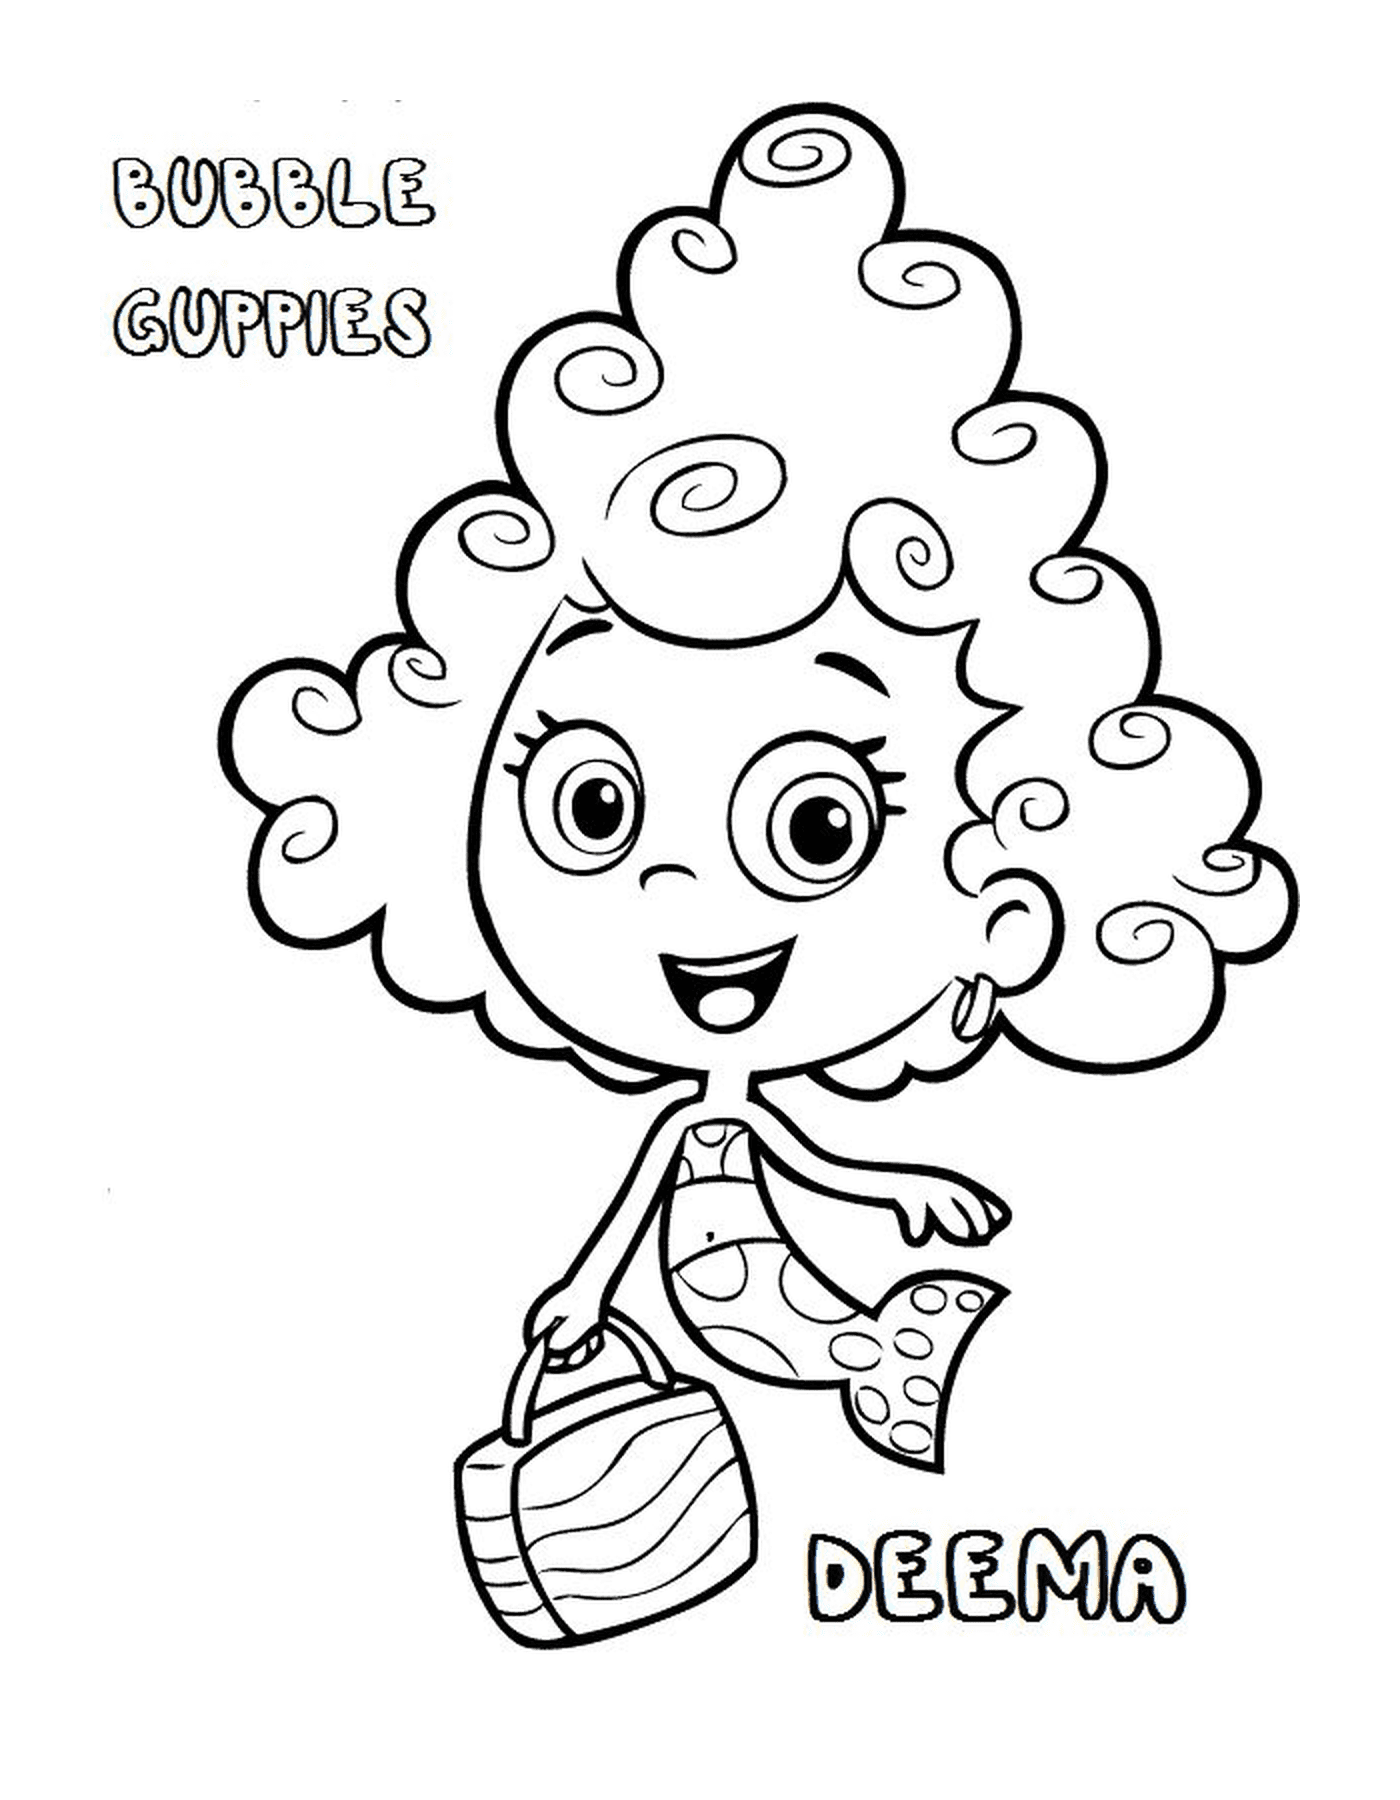  Deema of the Bubble Guppies, uma menina com cabelo encaracolado 